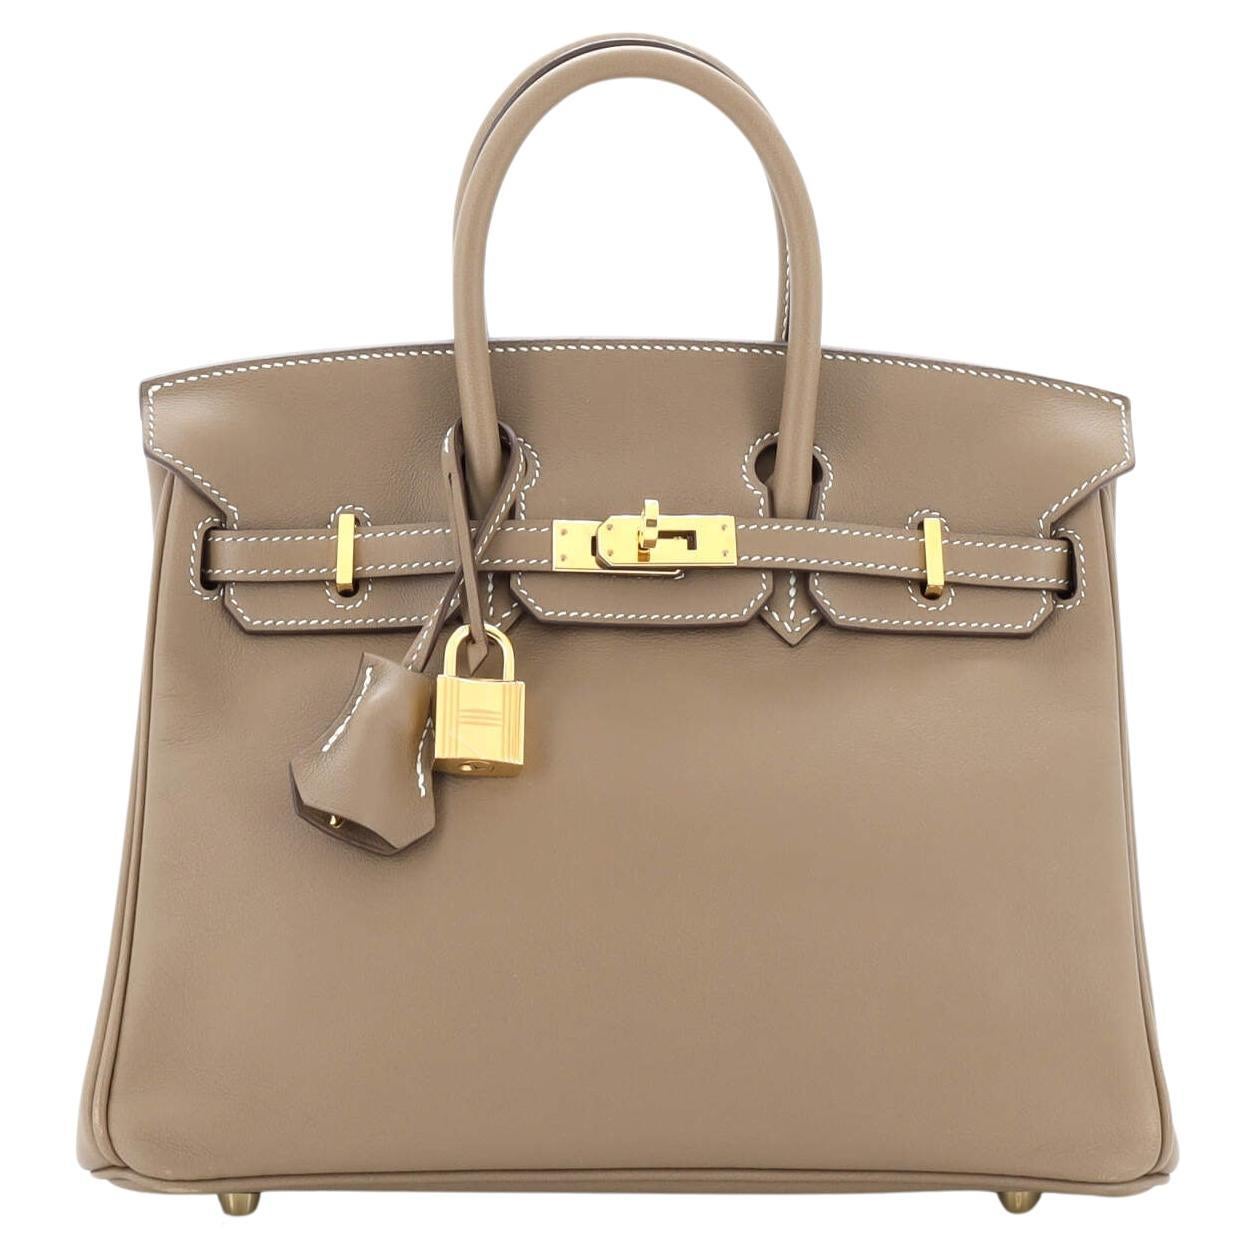 Hermes Birkin Handbag Grey Swift with Gold Hardware 25